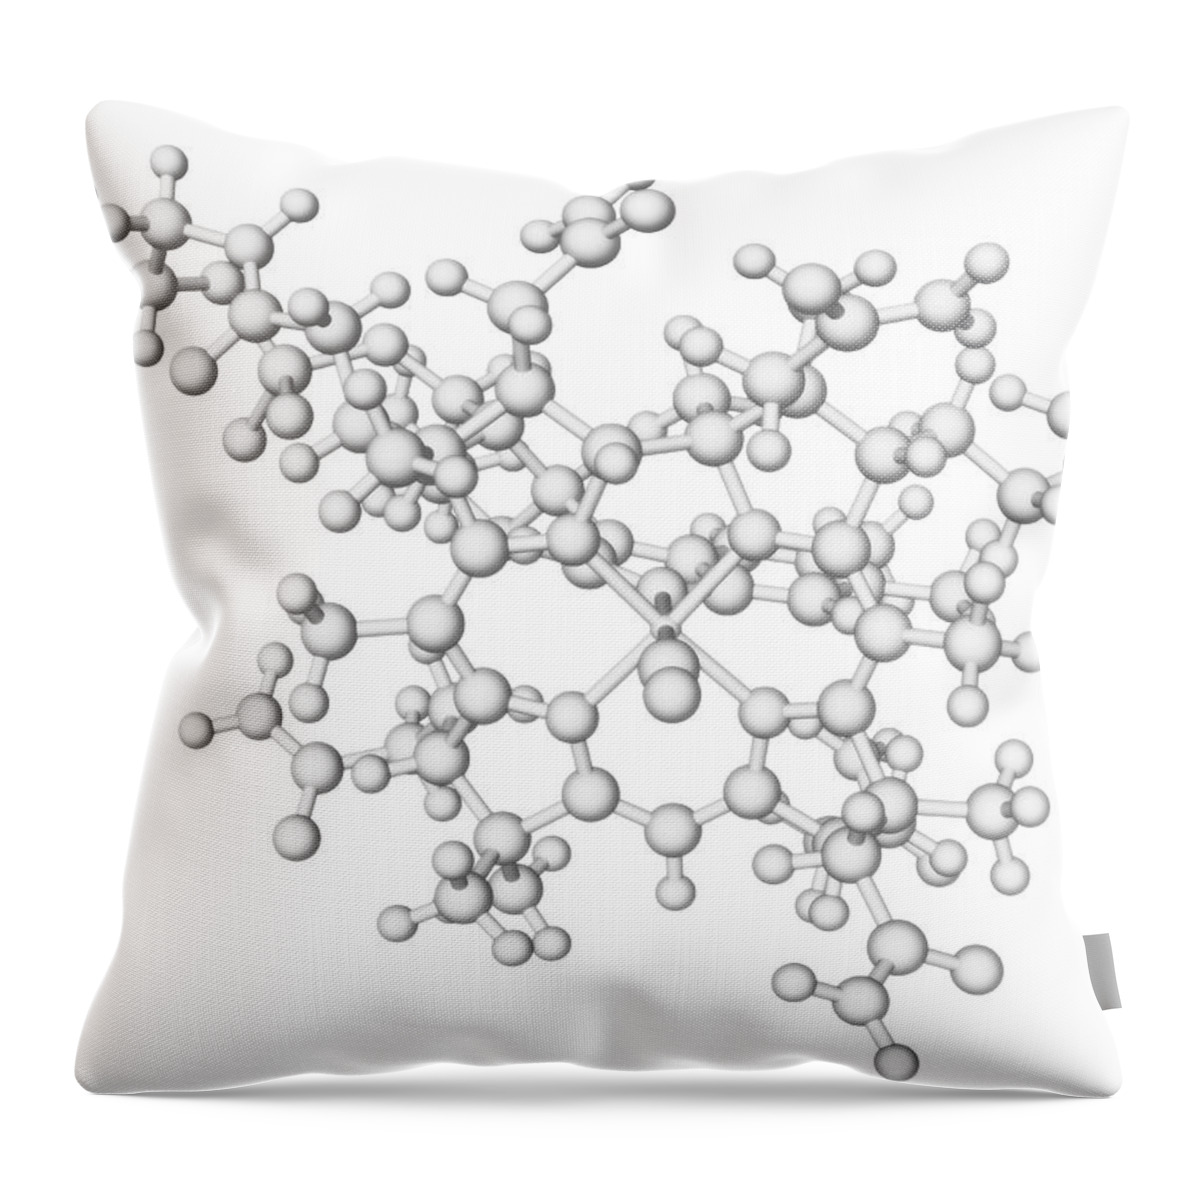 White Background Throw Pillow featuring the digital art Vitamin B12 Molecule by Laguna Design